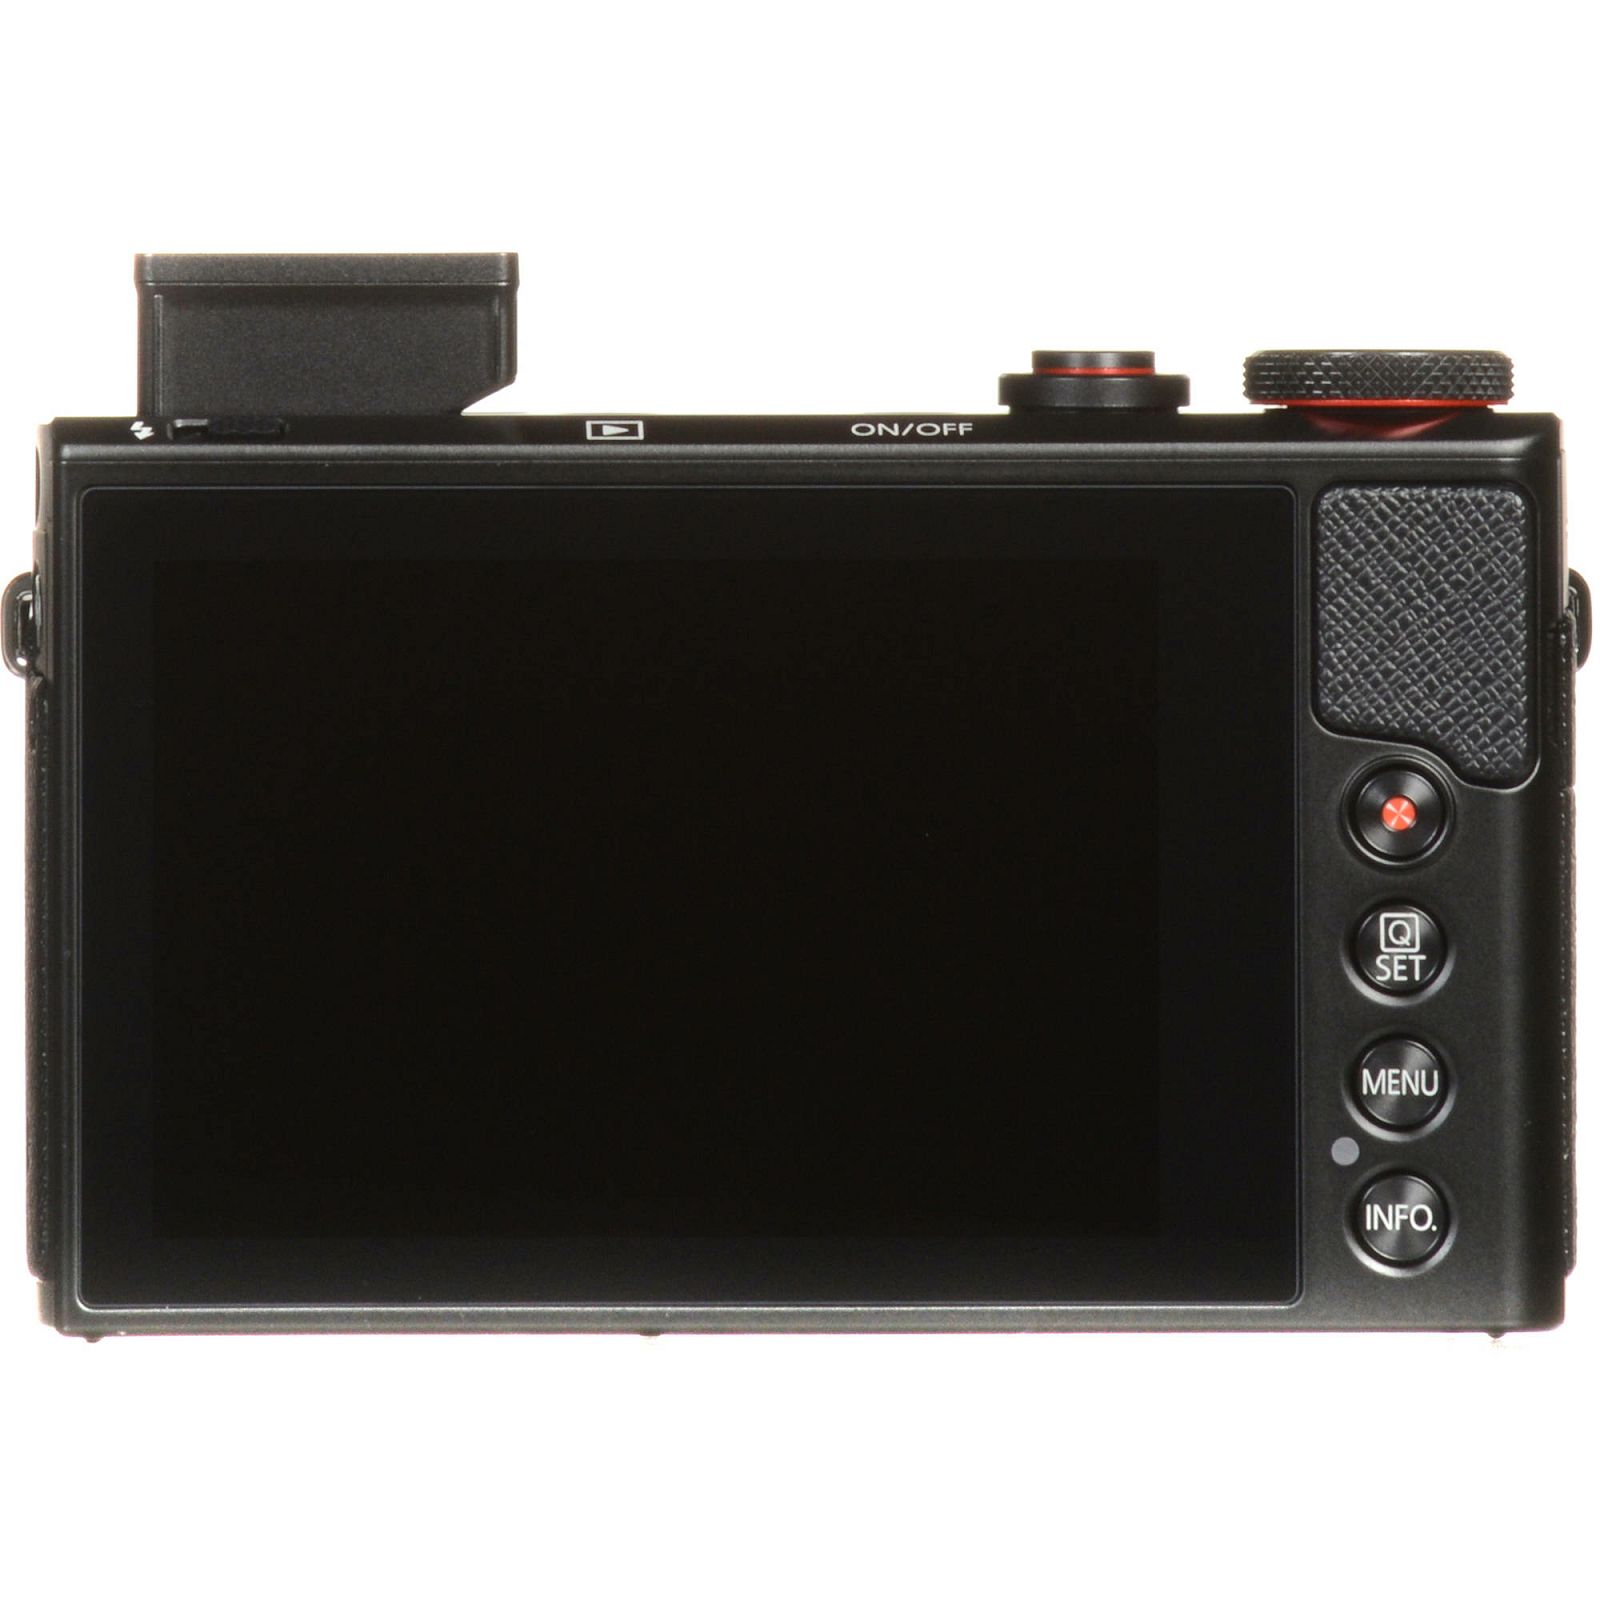 Canon Powershot G9X II Black crni kompaktni digitalni fotoaparat (1717C002AA)